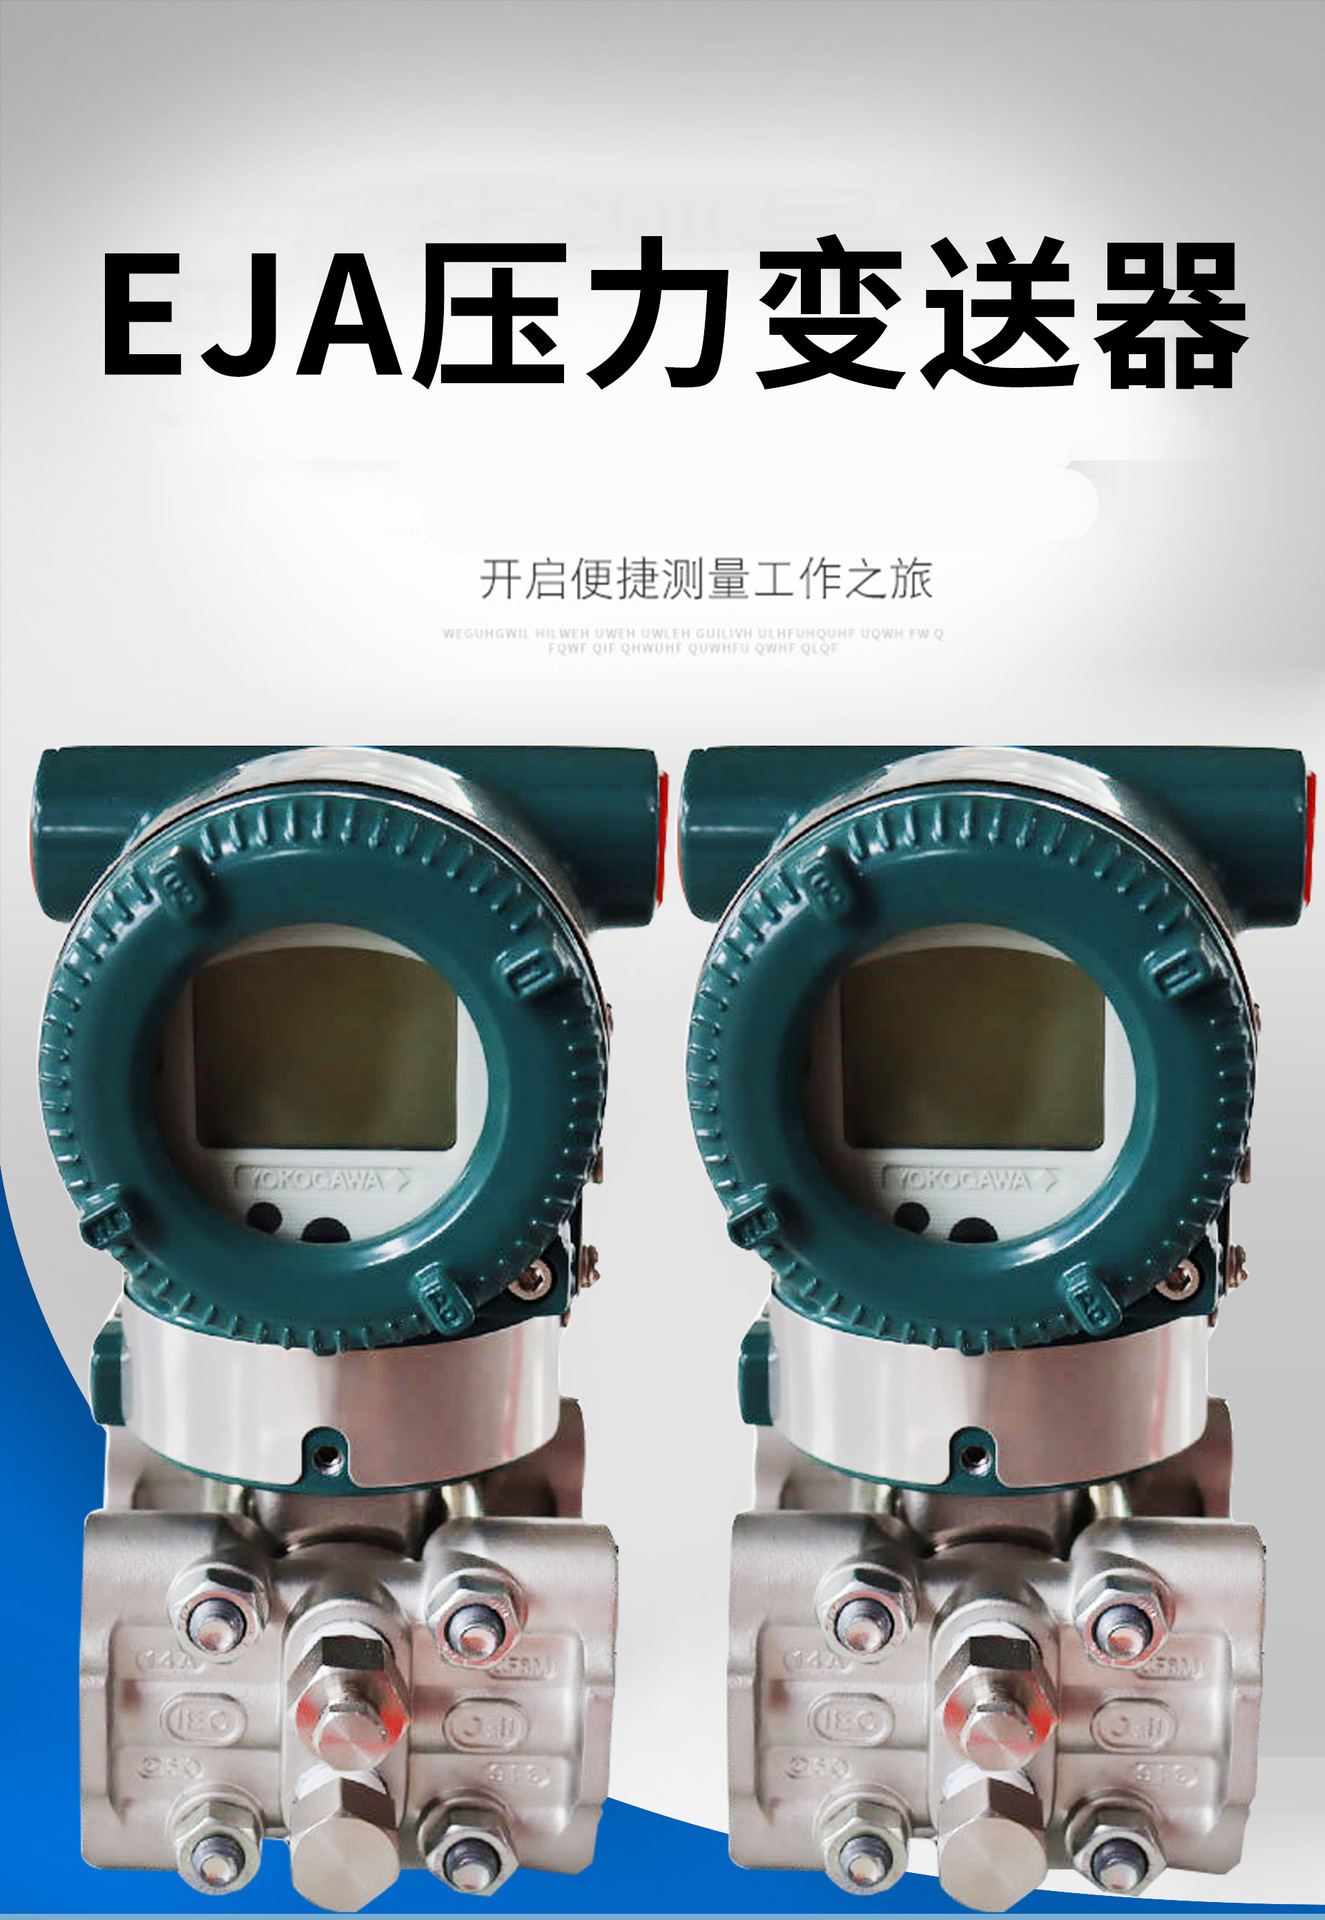 EJA横河川仪压力变送器530E110E气液体油水传感器温度差压变送器示例图1